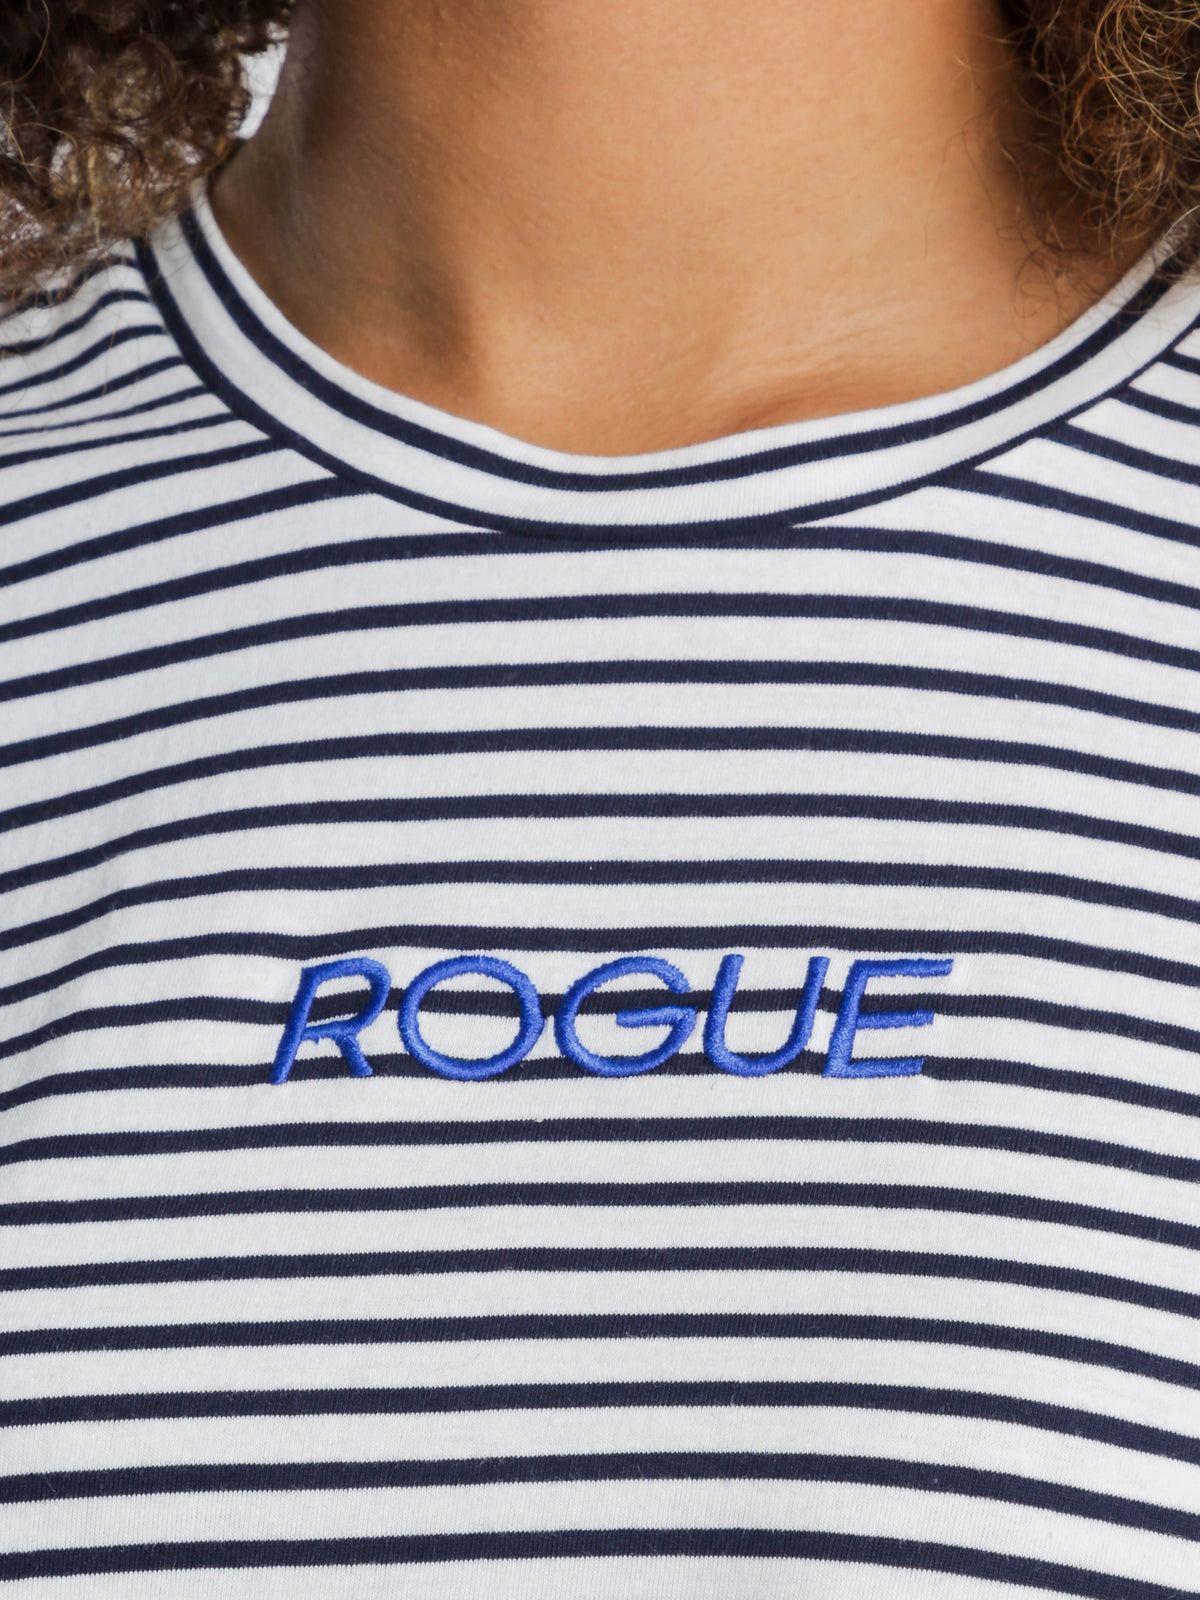 Rogue T-Shirt in Midnight Stripe